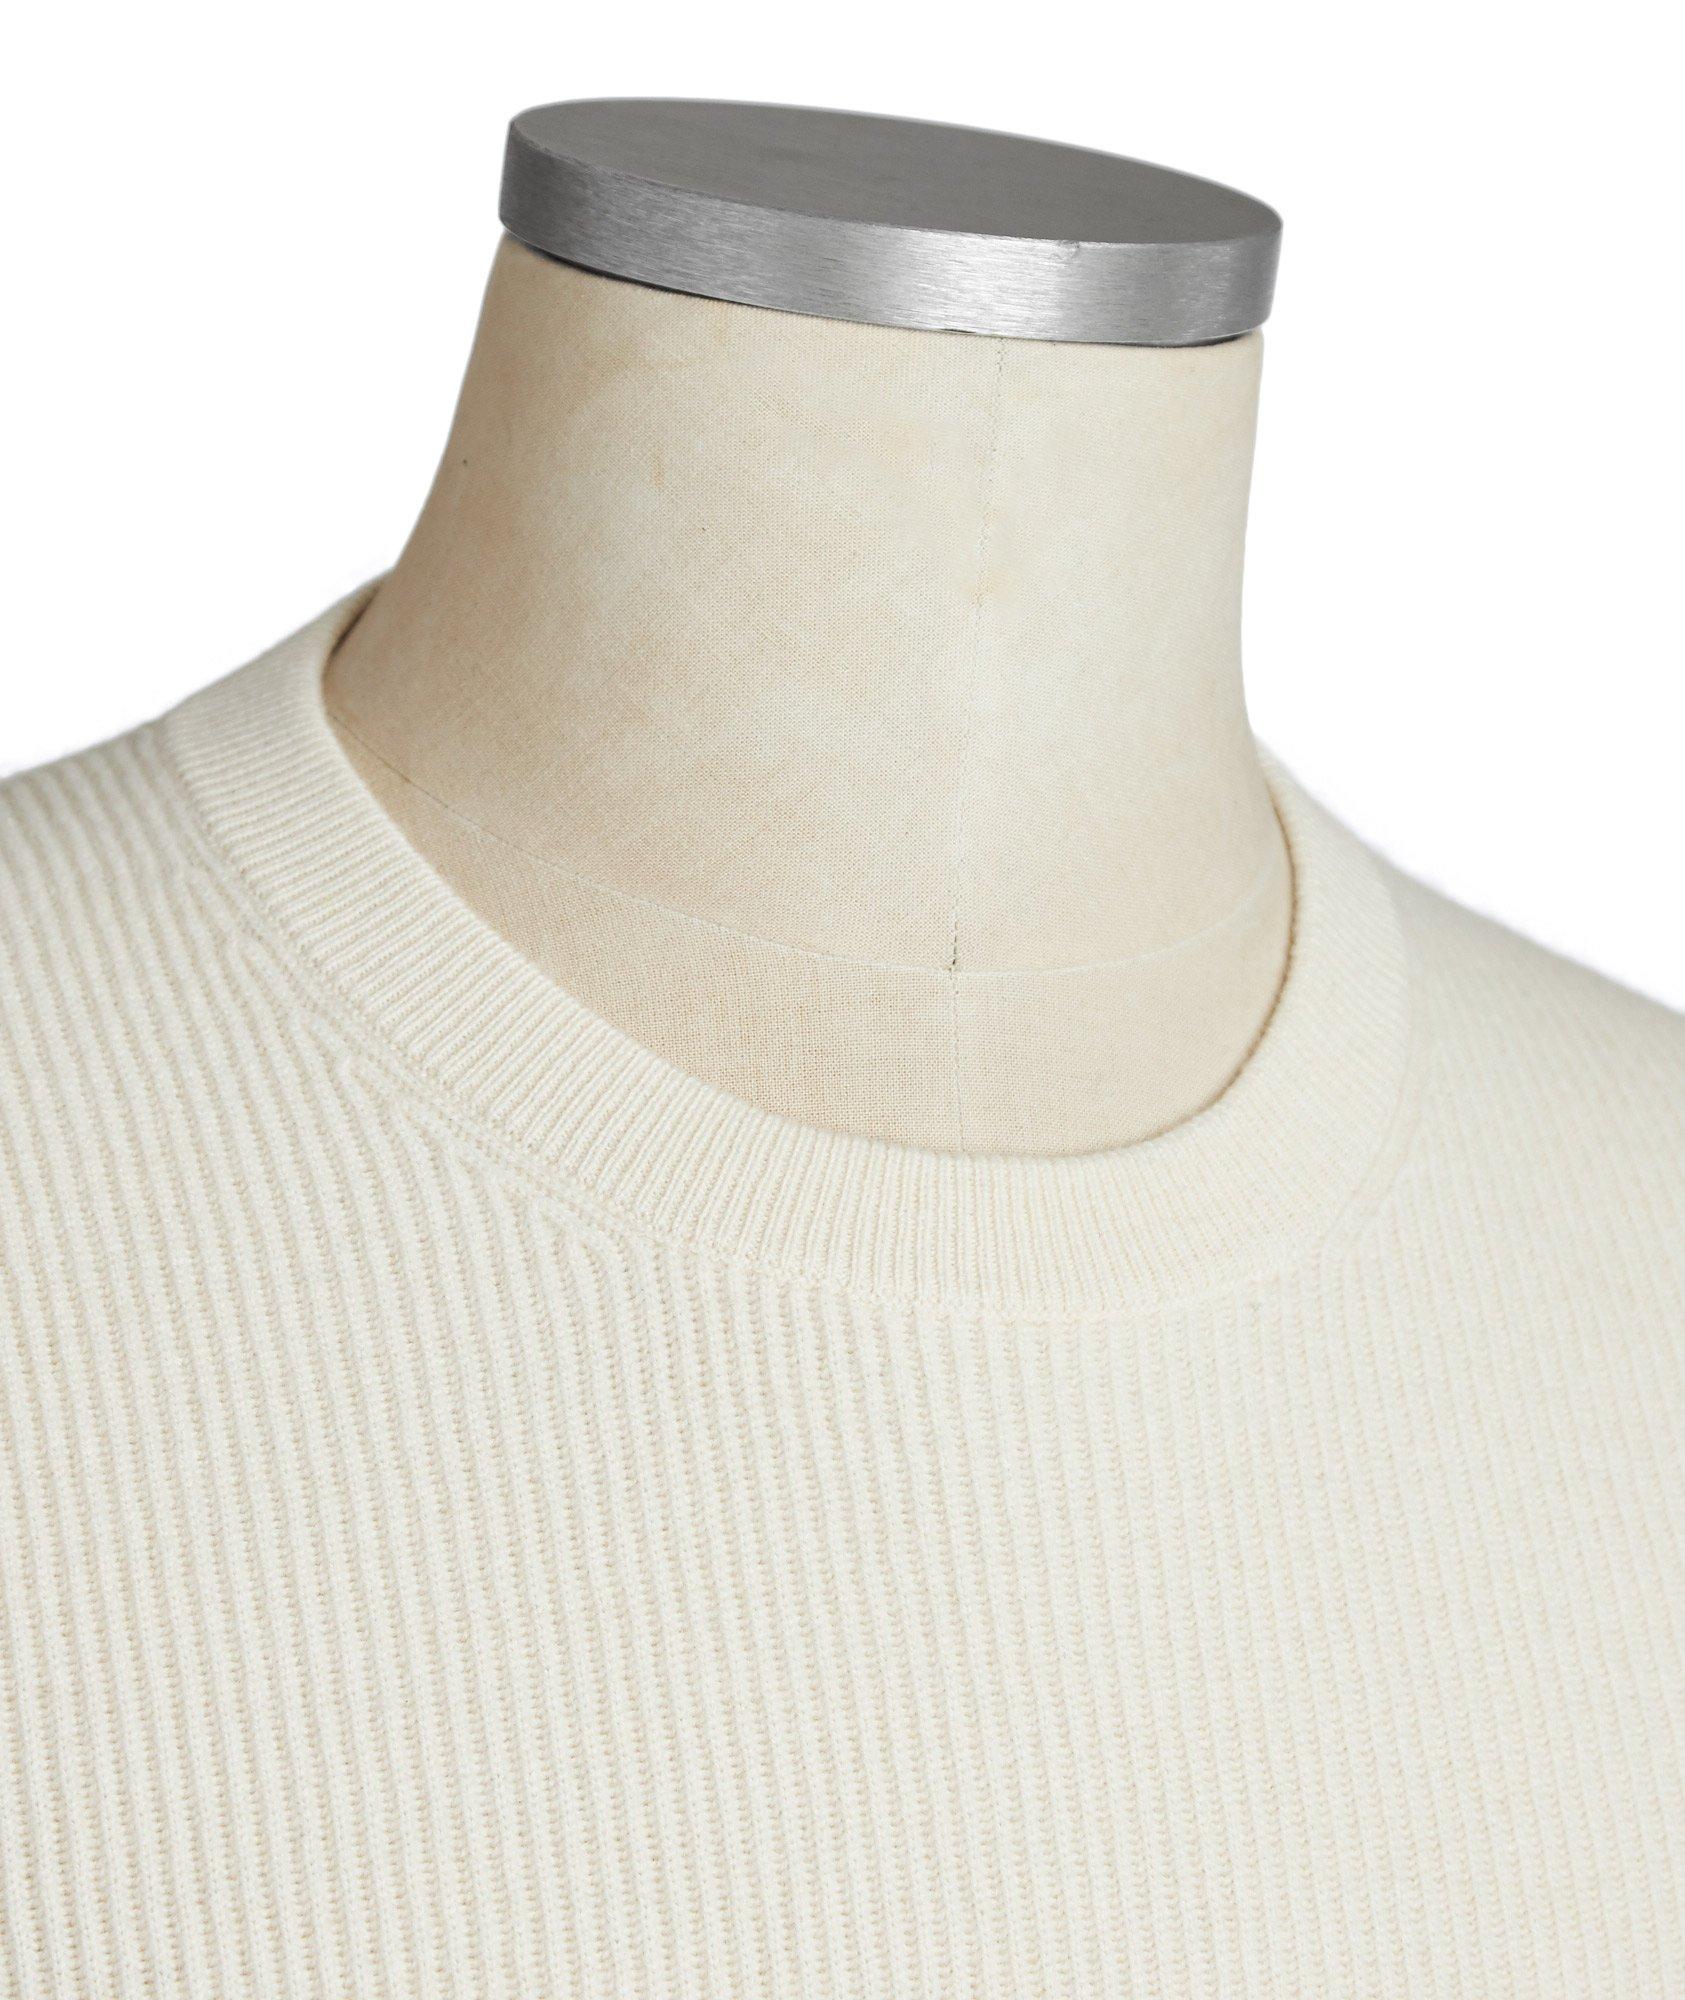 Virgin Wool, Cashmere & Silk Sweater image 1